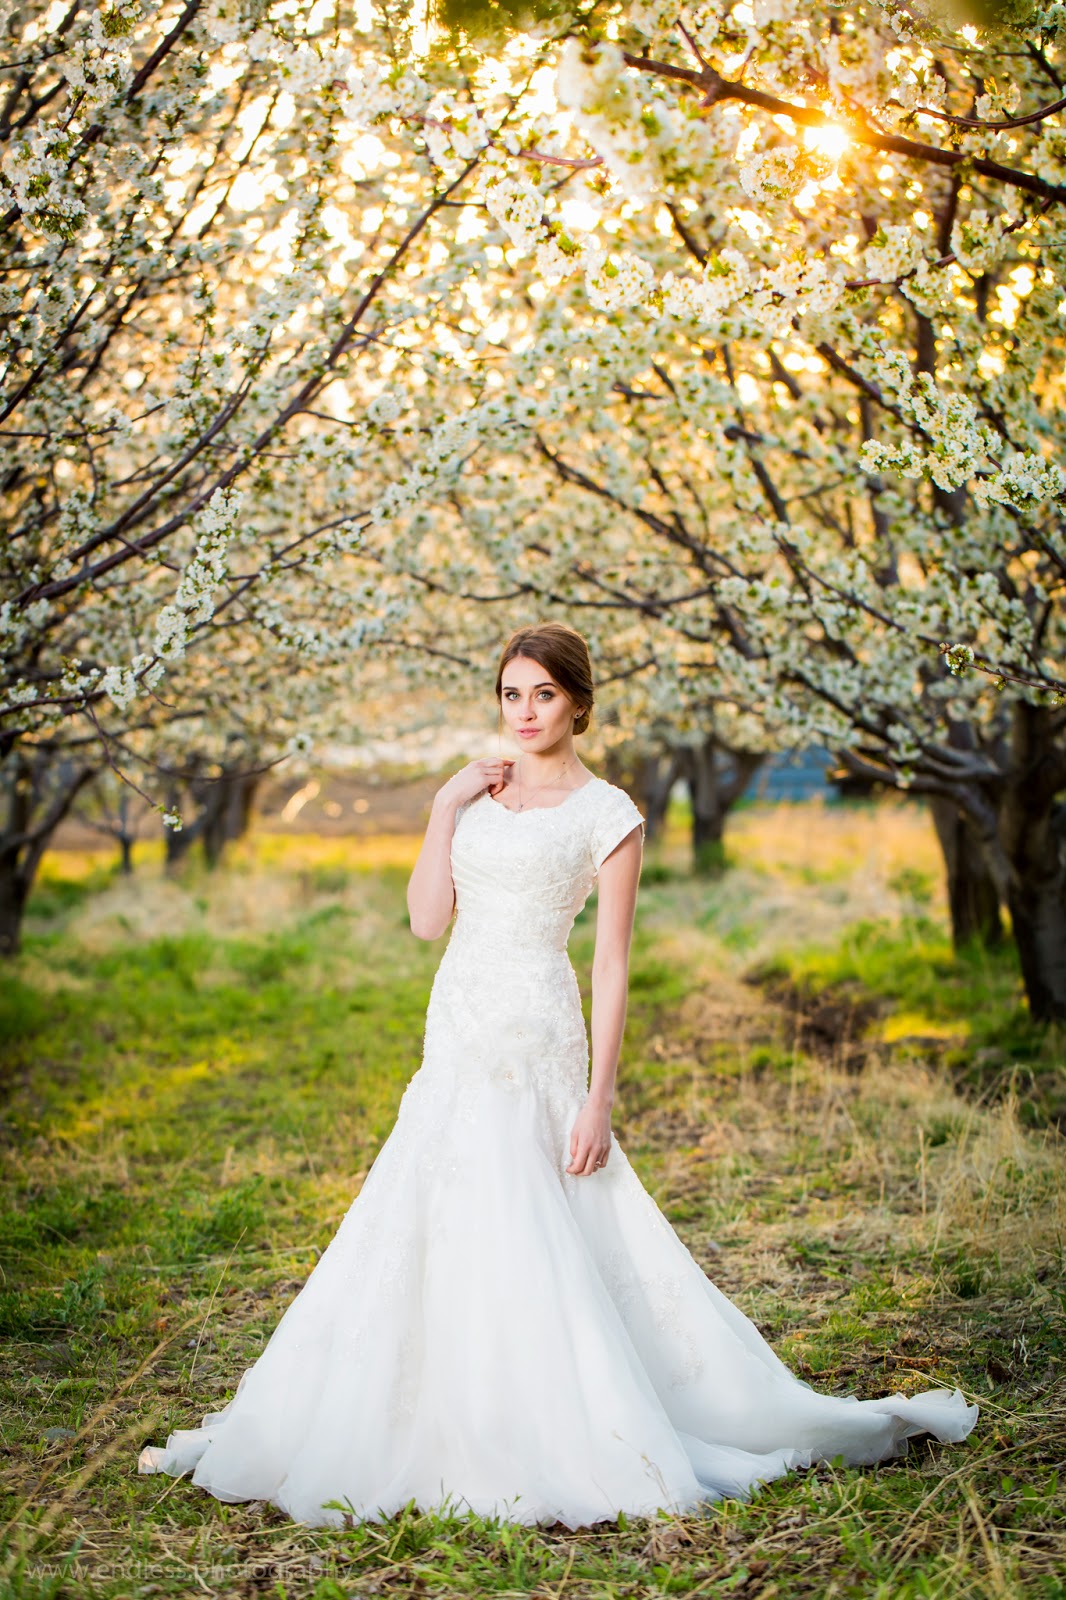 Logan Utah Photographers, Wedding Photography, Weddings, Bridals, Spring, Orchard, Blossoms, Couple, Wedding Dress, Logan Utah, Endless Photography